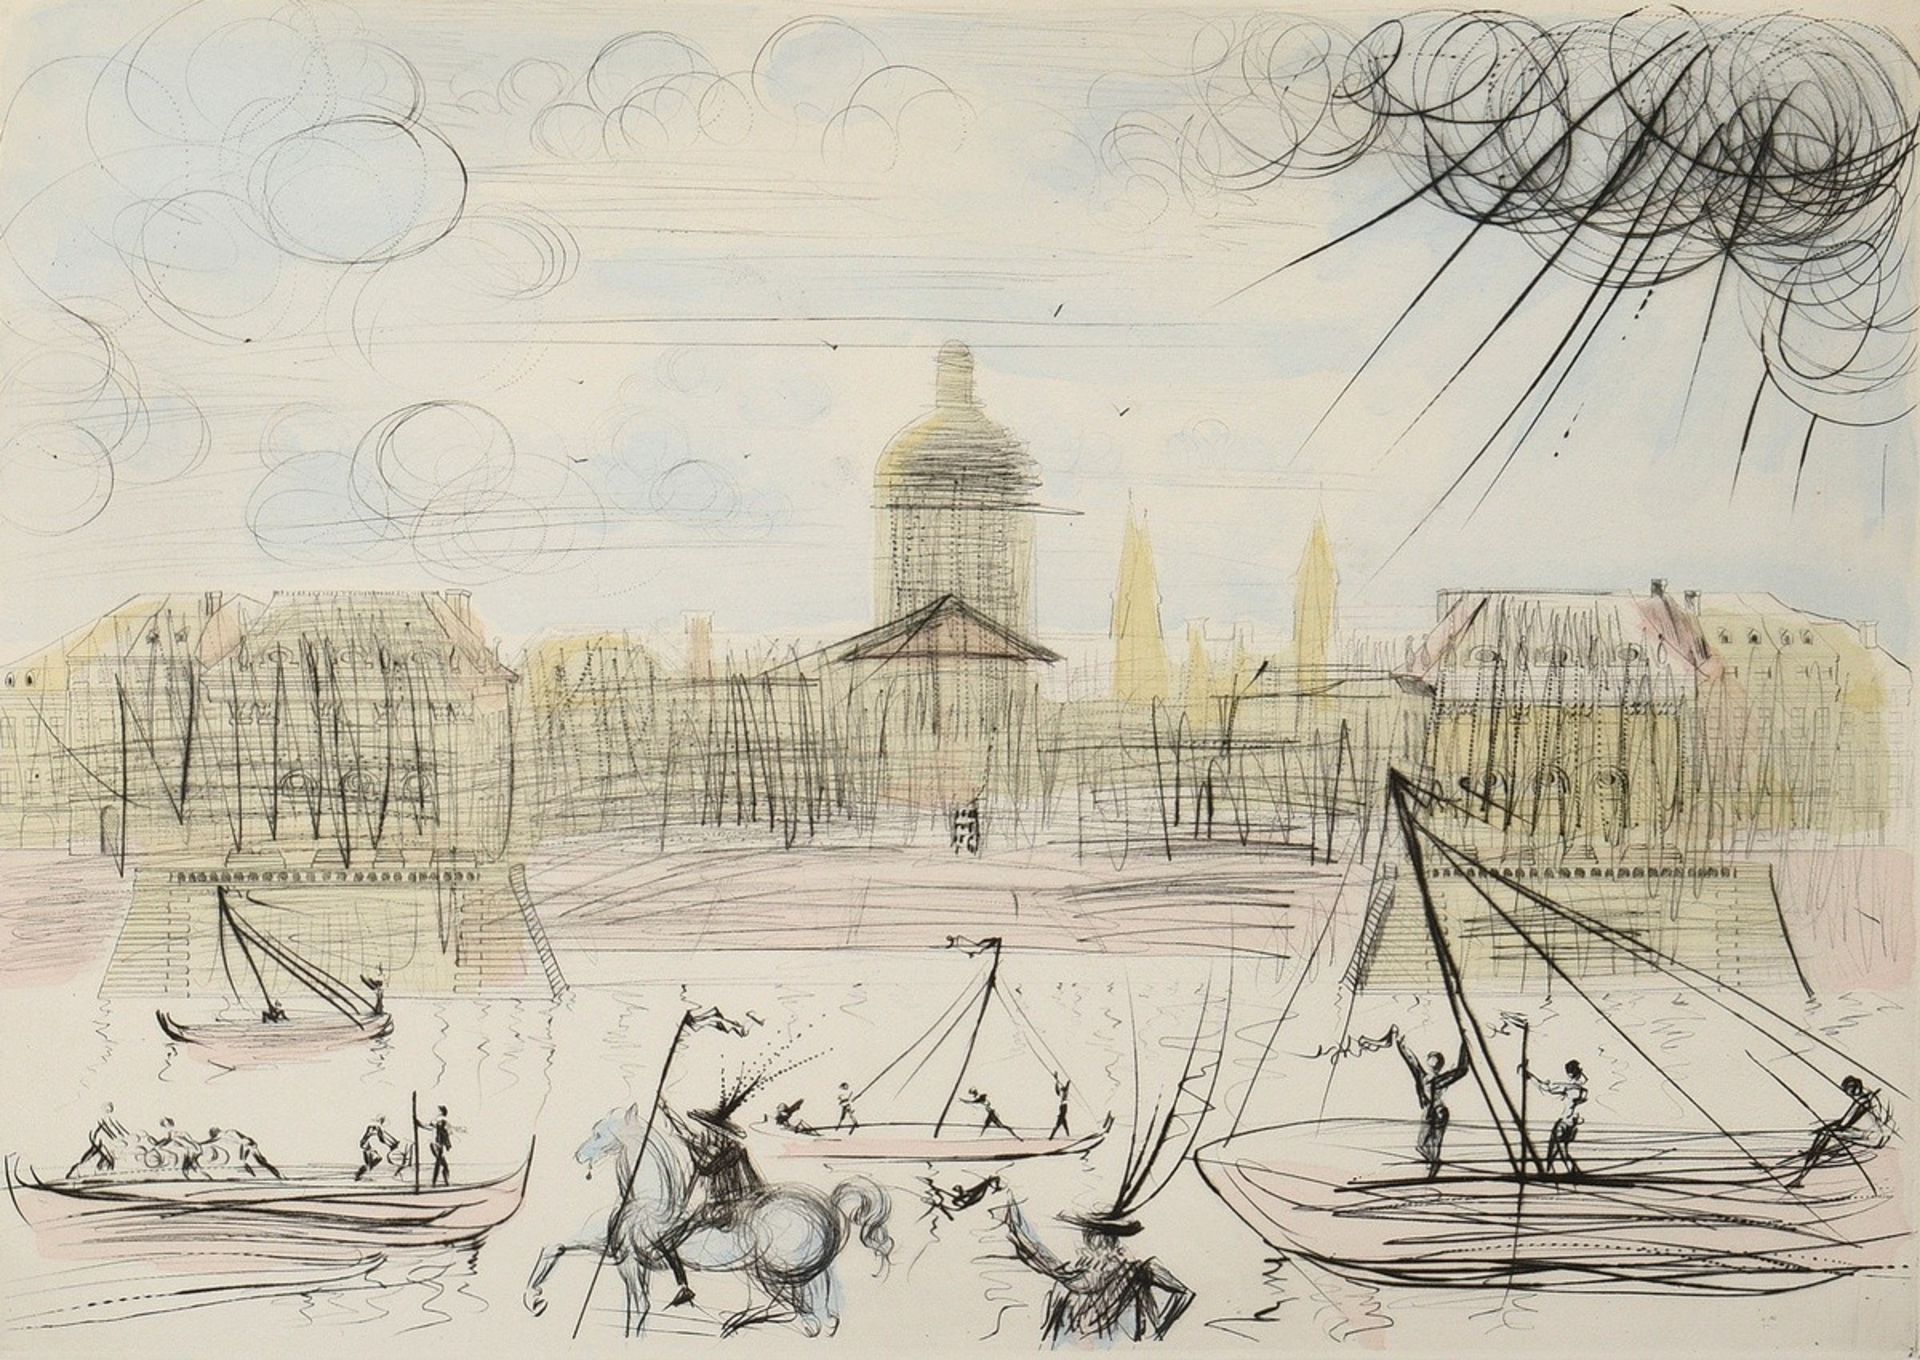 Dali, Salvador (1904-1989) "Academie des Beaux Arts" 1975, colour etching, e.a., b. sign./inscr., v